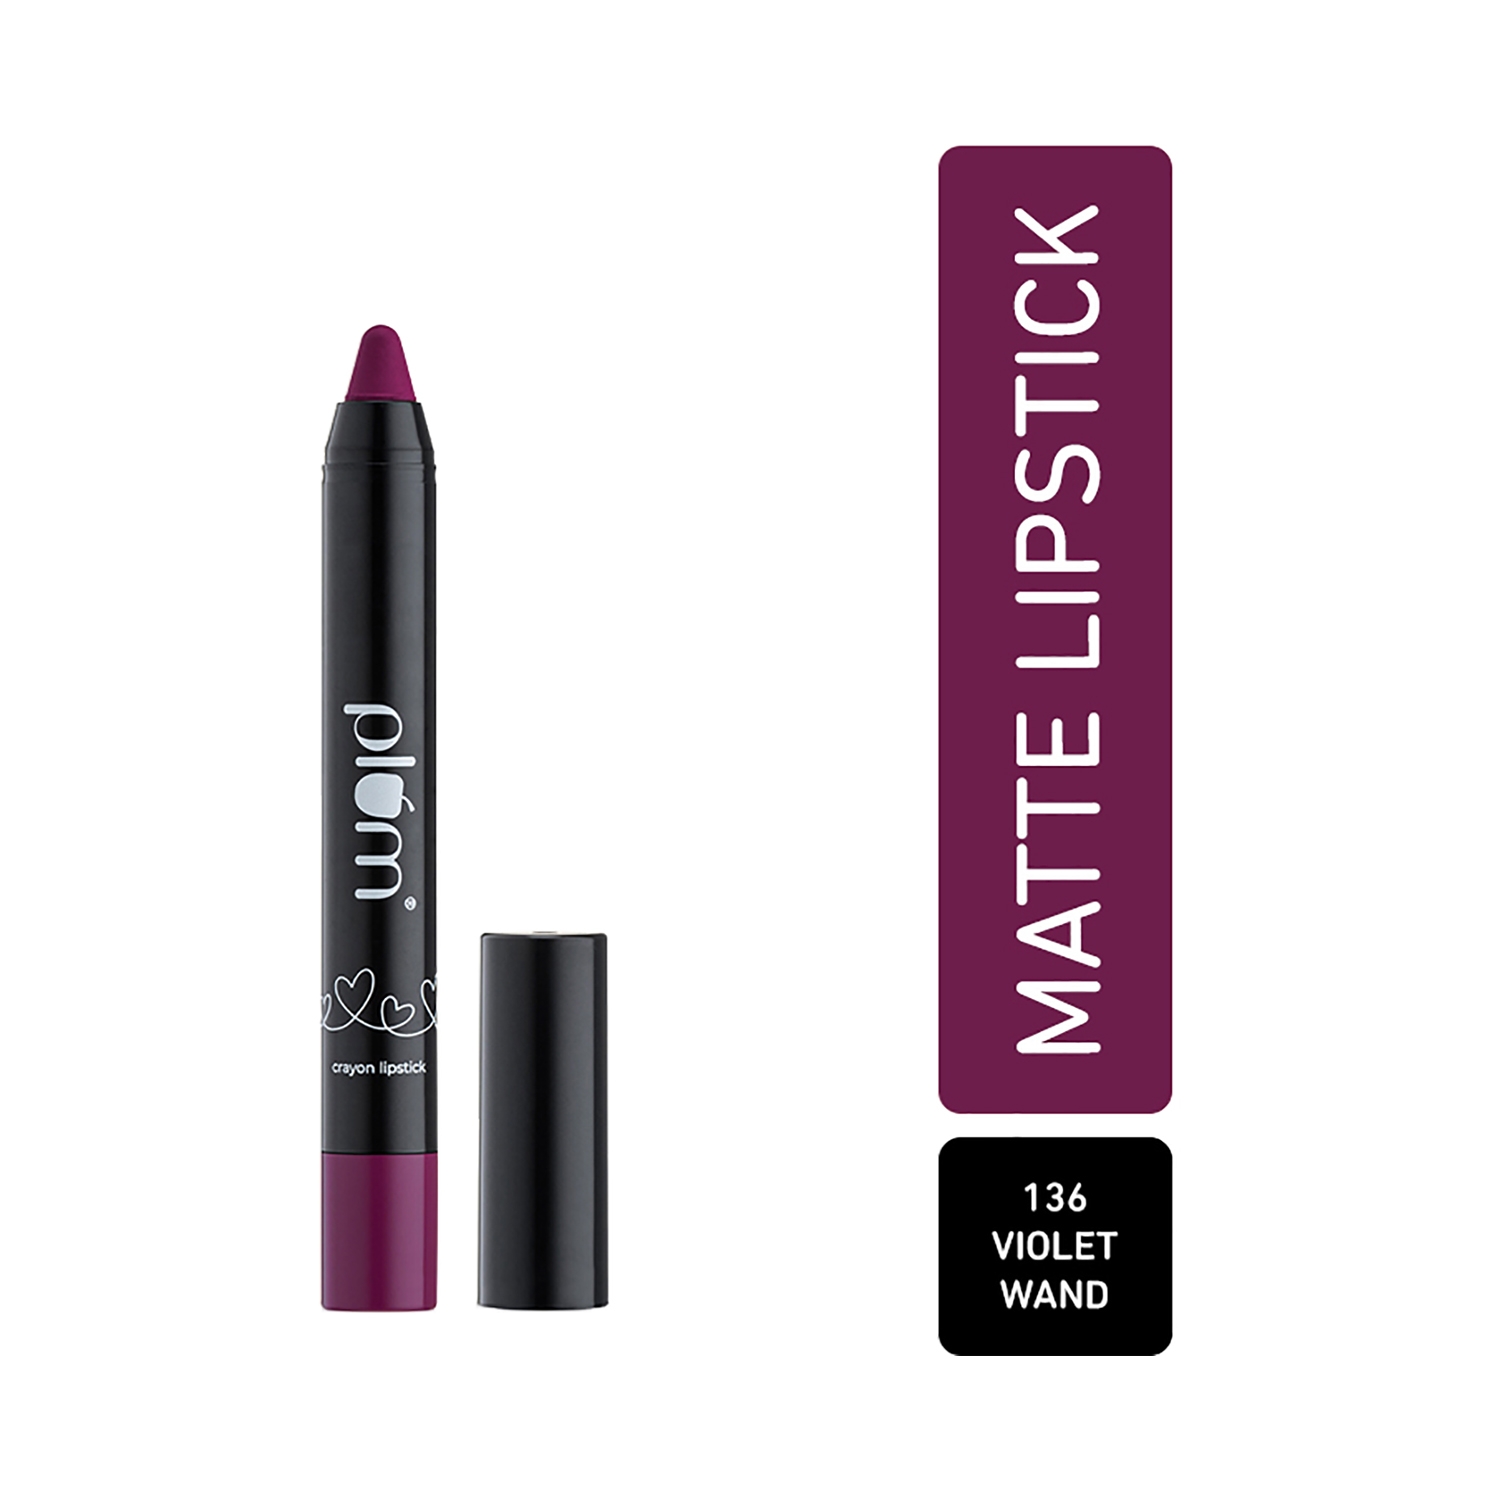 Plum | Plum Twist & Go Matte Crayon Lipstick with Ceramides & Hyaluronic Acid - 136 Violet Wand (1.8g)